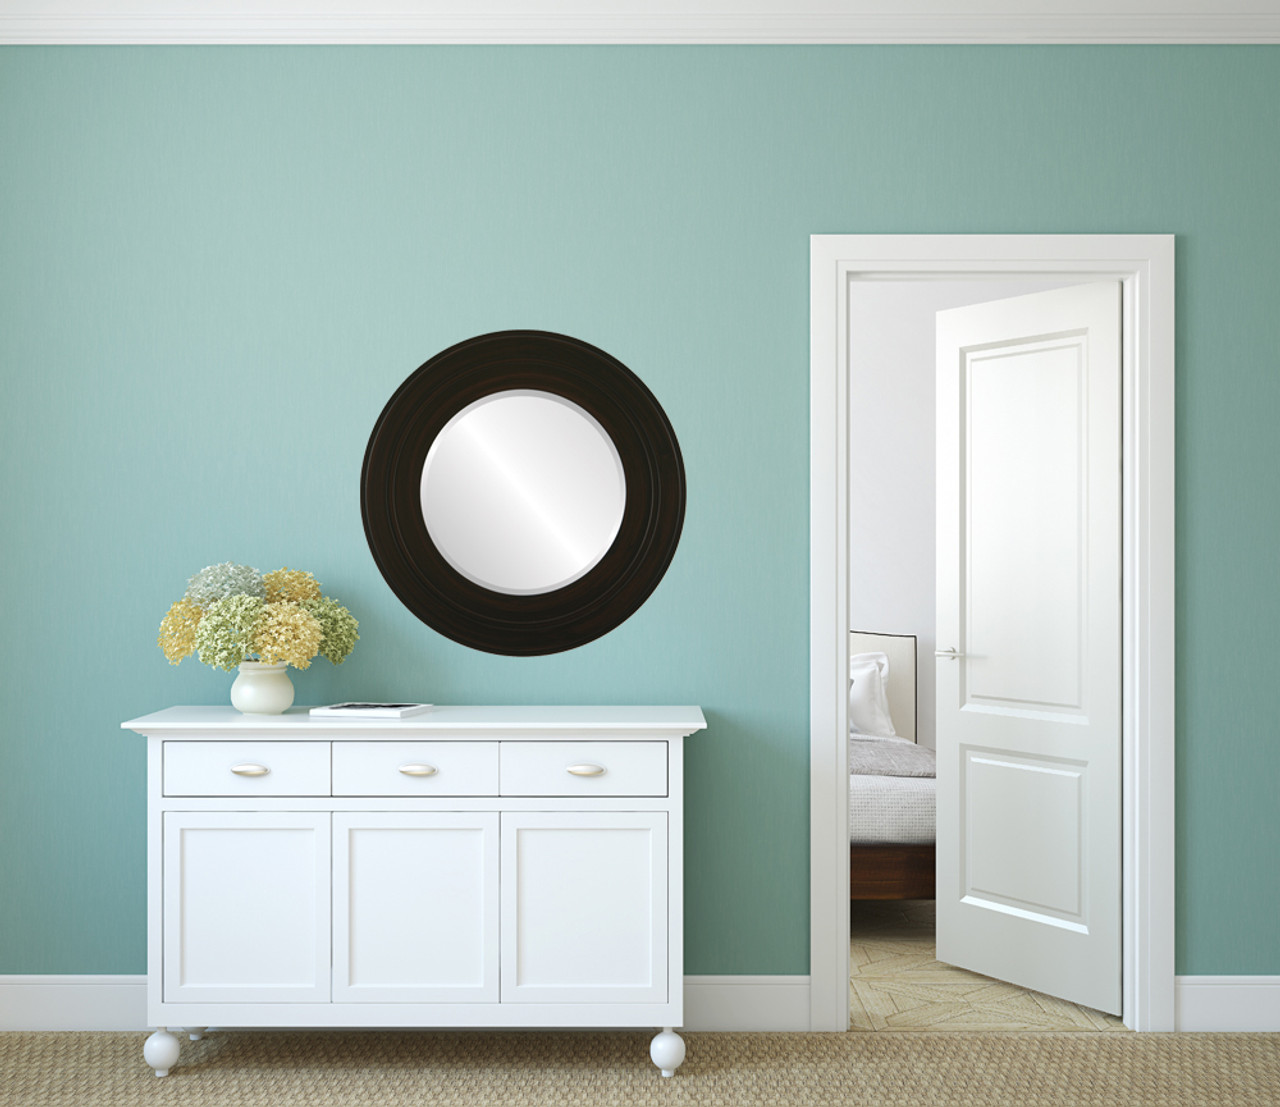 Palomar Framed Round Mirror - Black Walnut - Wood - 20 / 22 - Simple & Modern Designs - Oval and Round Mirrors